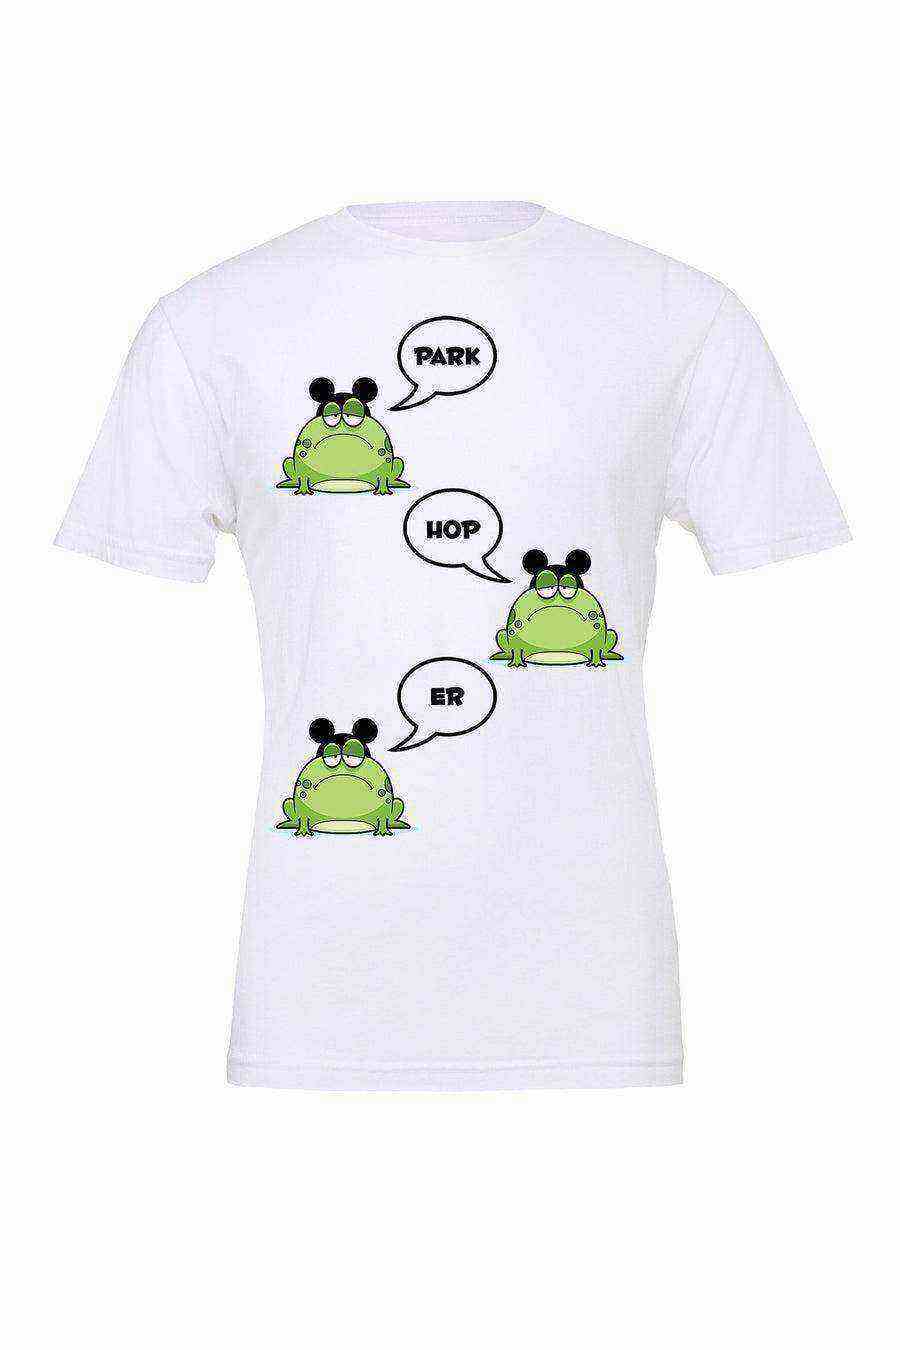 Womens | Park Hopper Frogs Shirt - Dylan's Tees